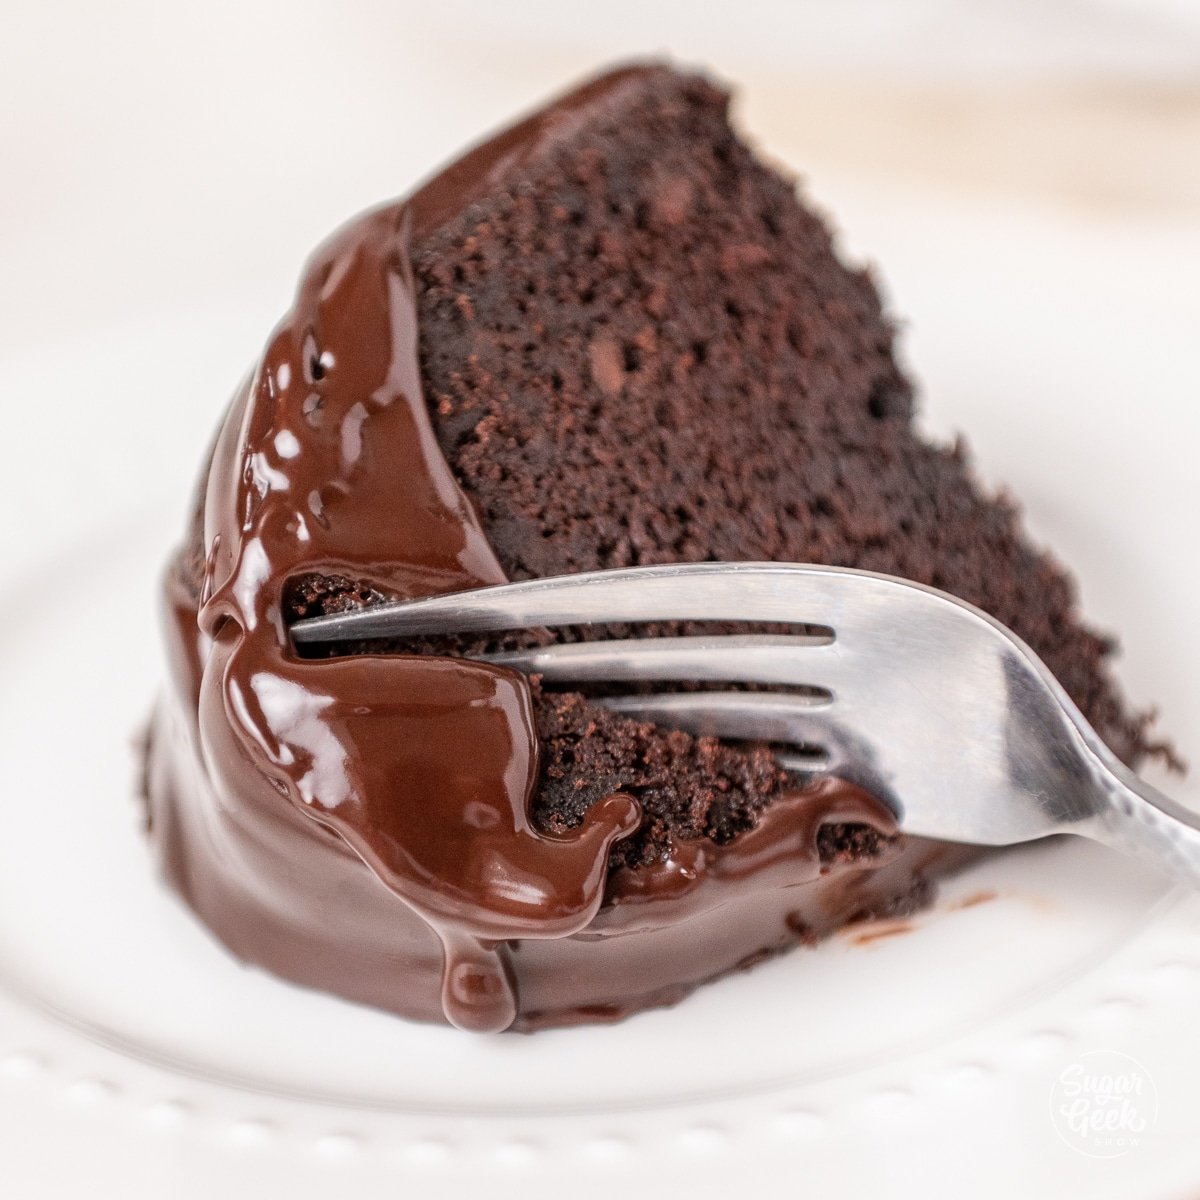 fork cutting through a slice of gooey chocolate bundt cake